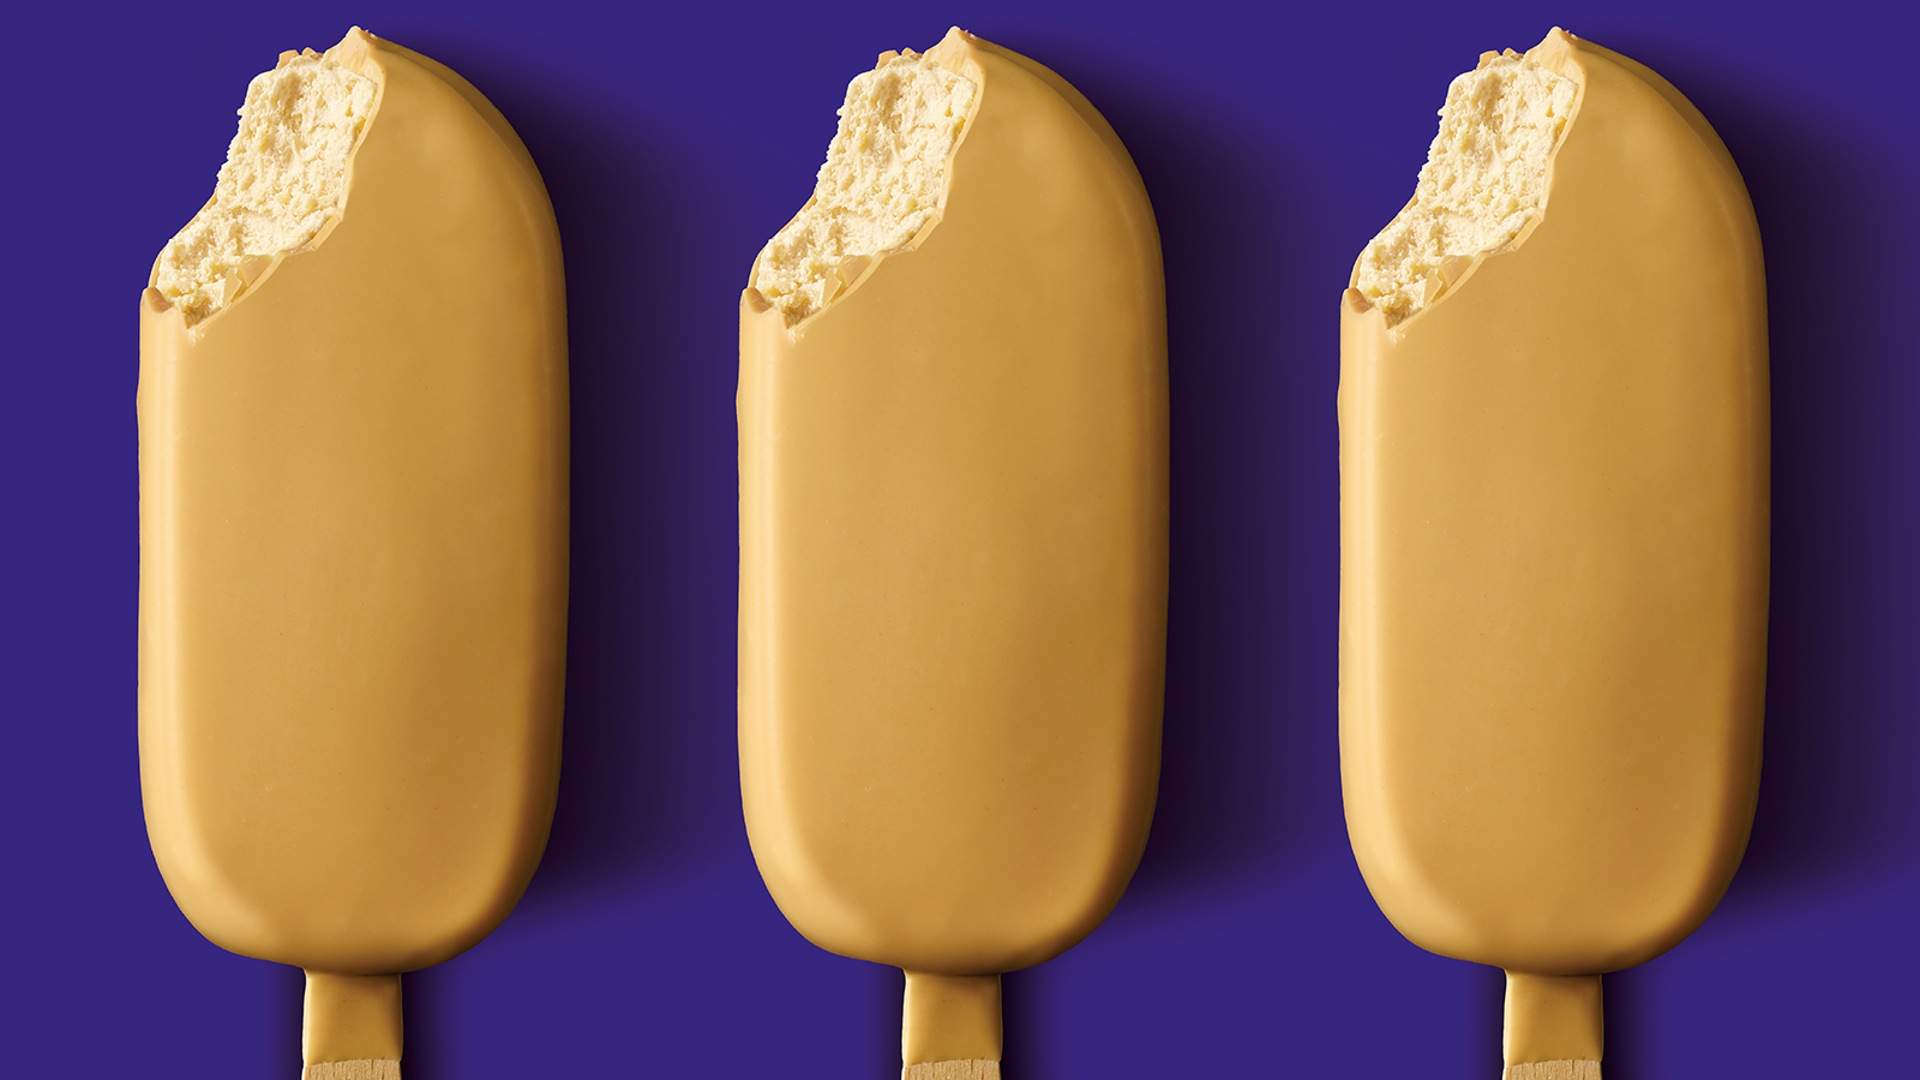 Cadbury's New Caramilk Ice Creams Are Landing in the Freezer Aisle Next Week